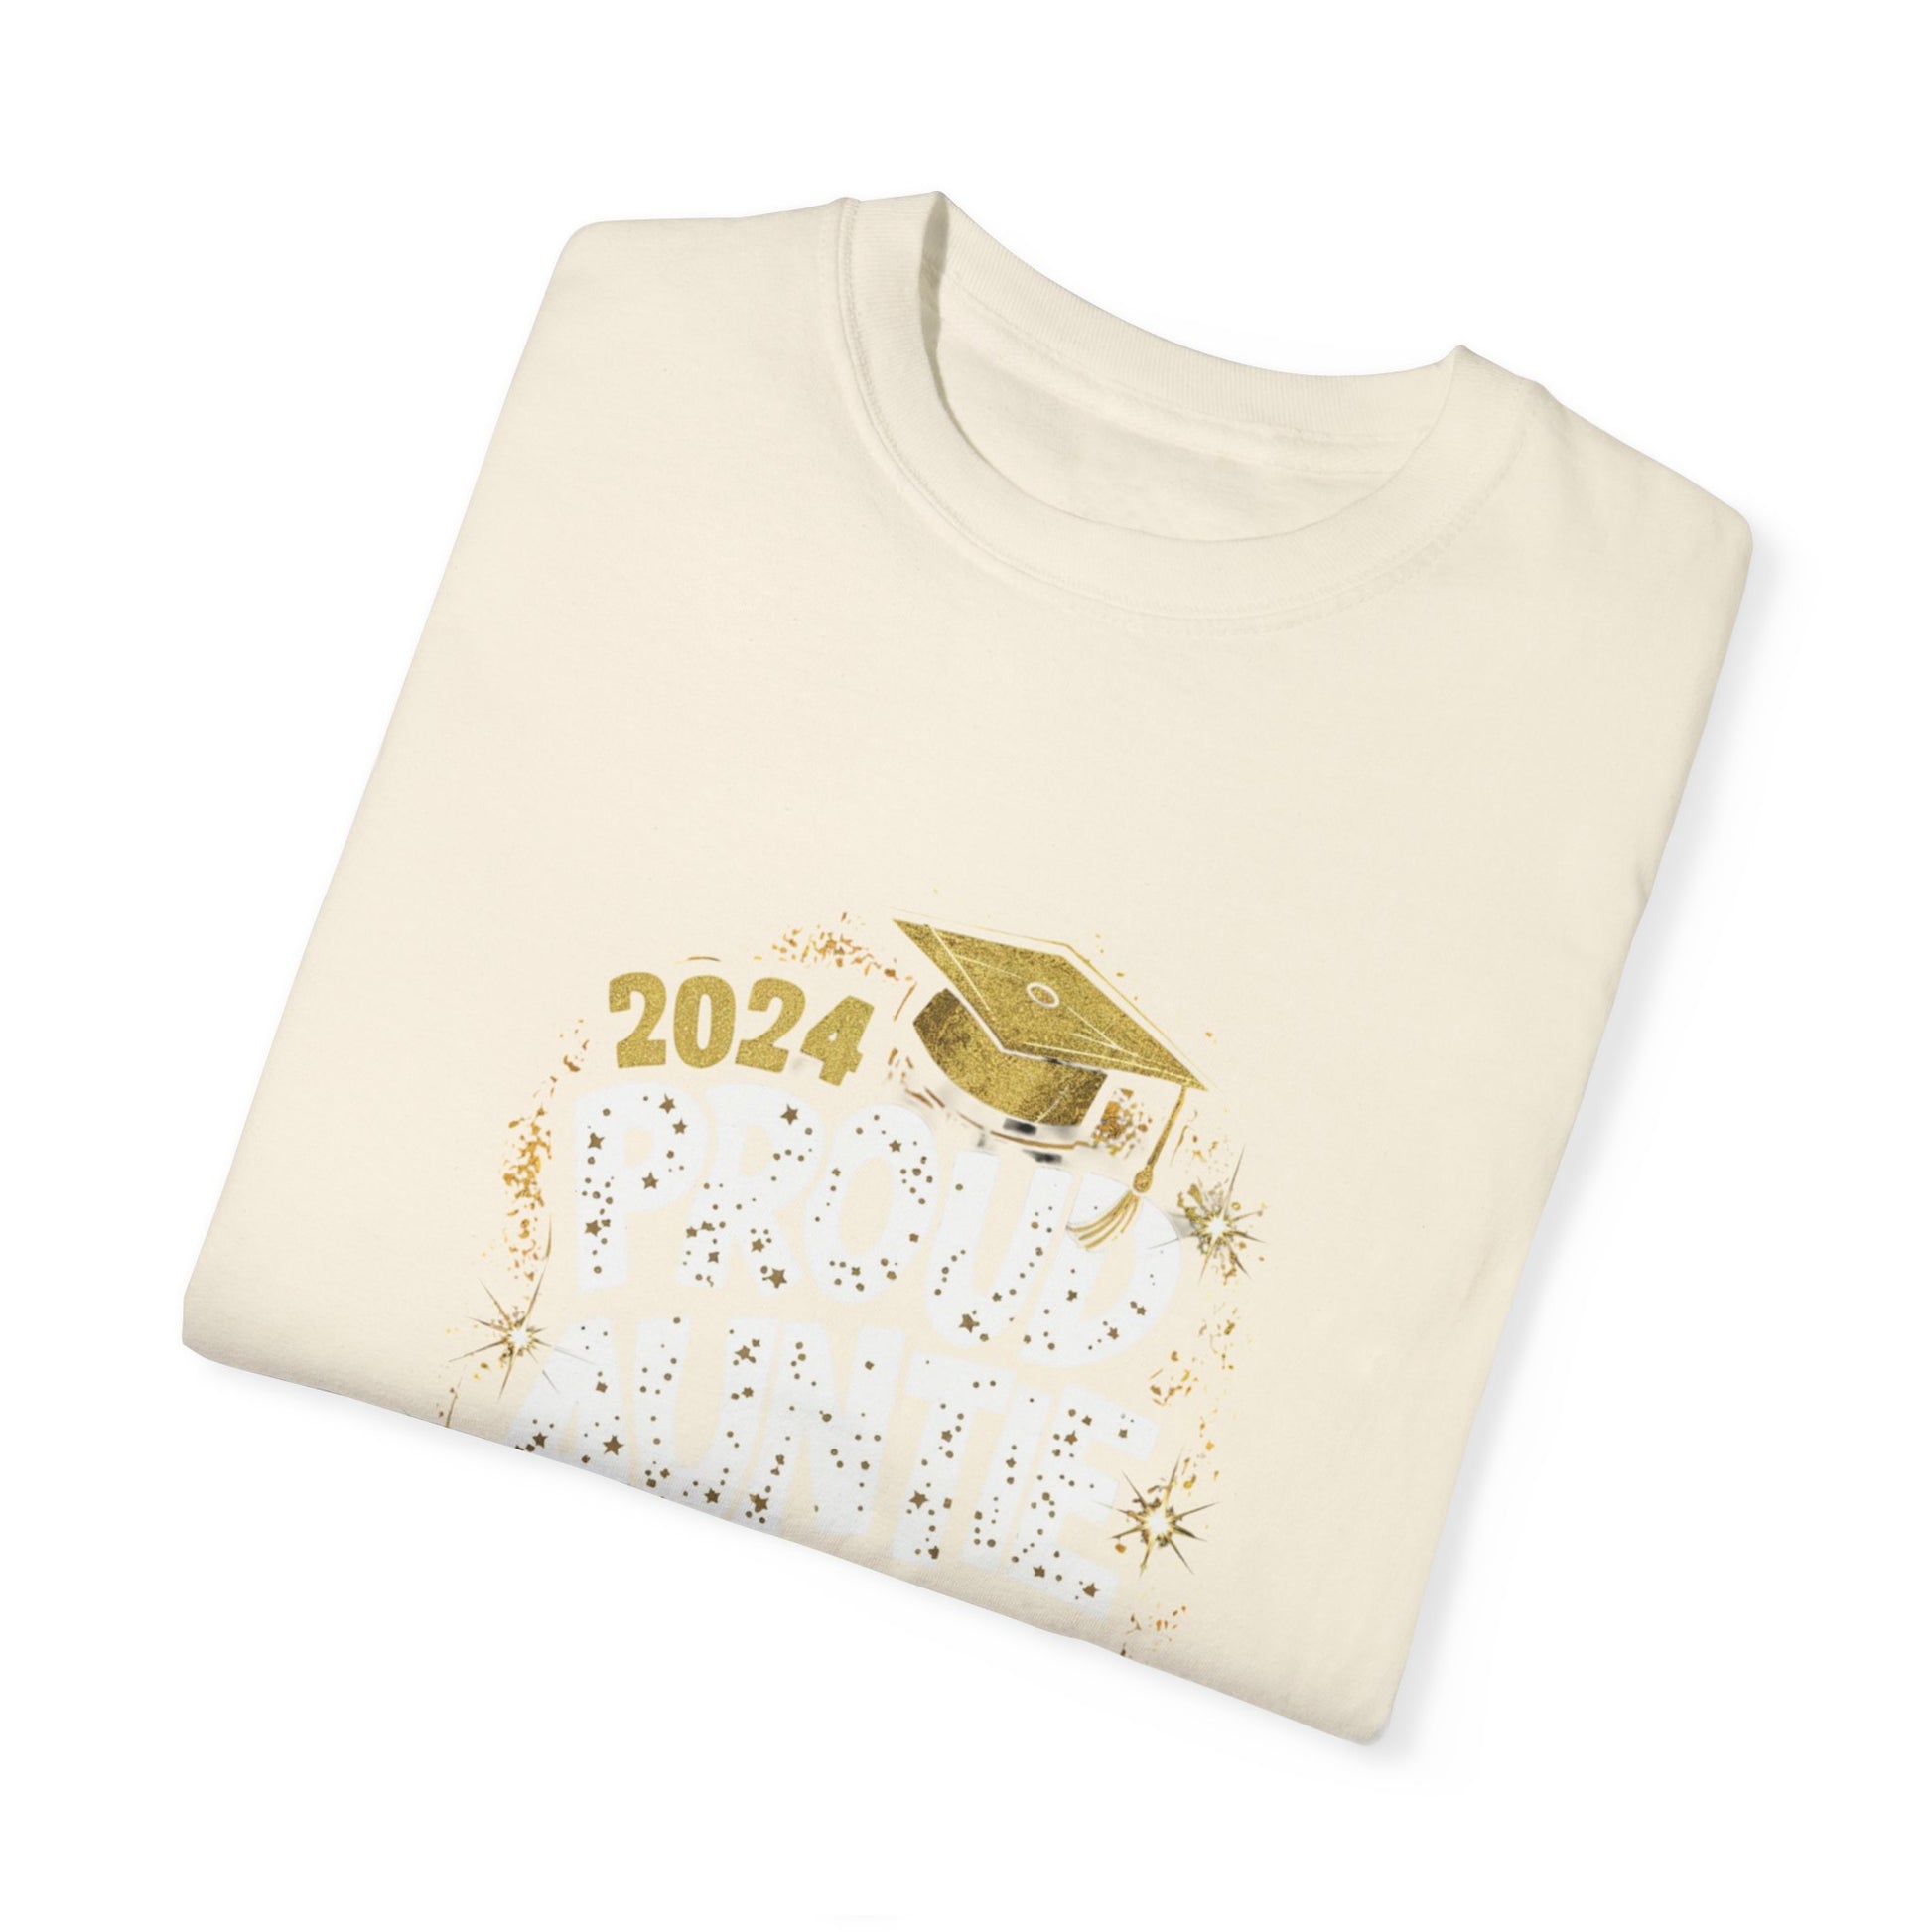 Proud Auntie of a 2024 Graduate Unisex Garment-dyed T-shirt Cotton Funny Humorous Graphic Soft Premium Unisex Men Women Ivory T-shirt Birthday Gift-43